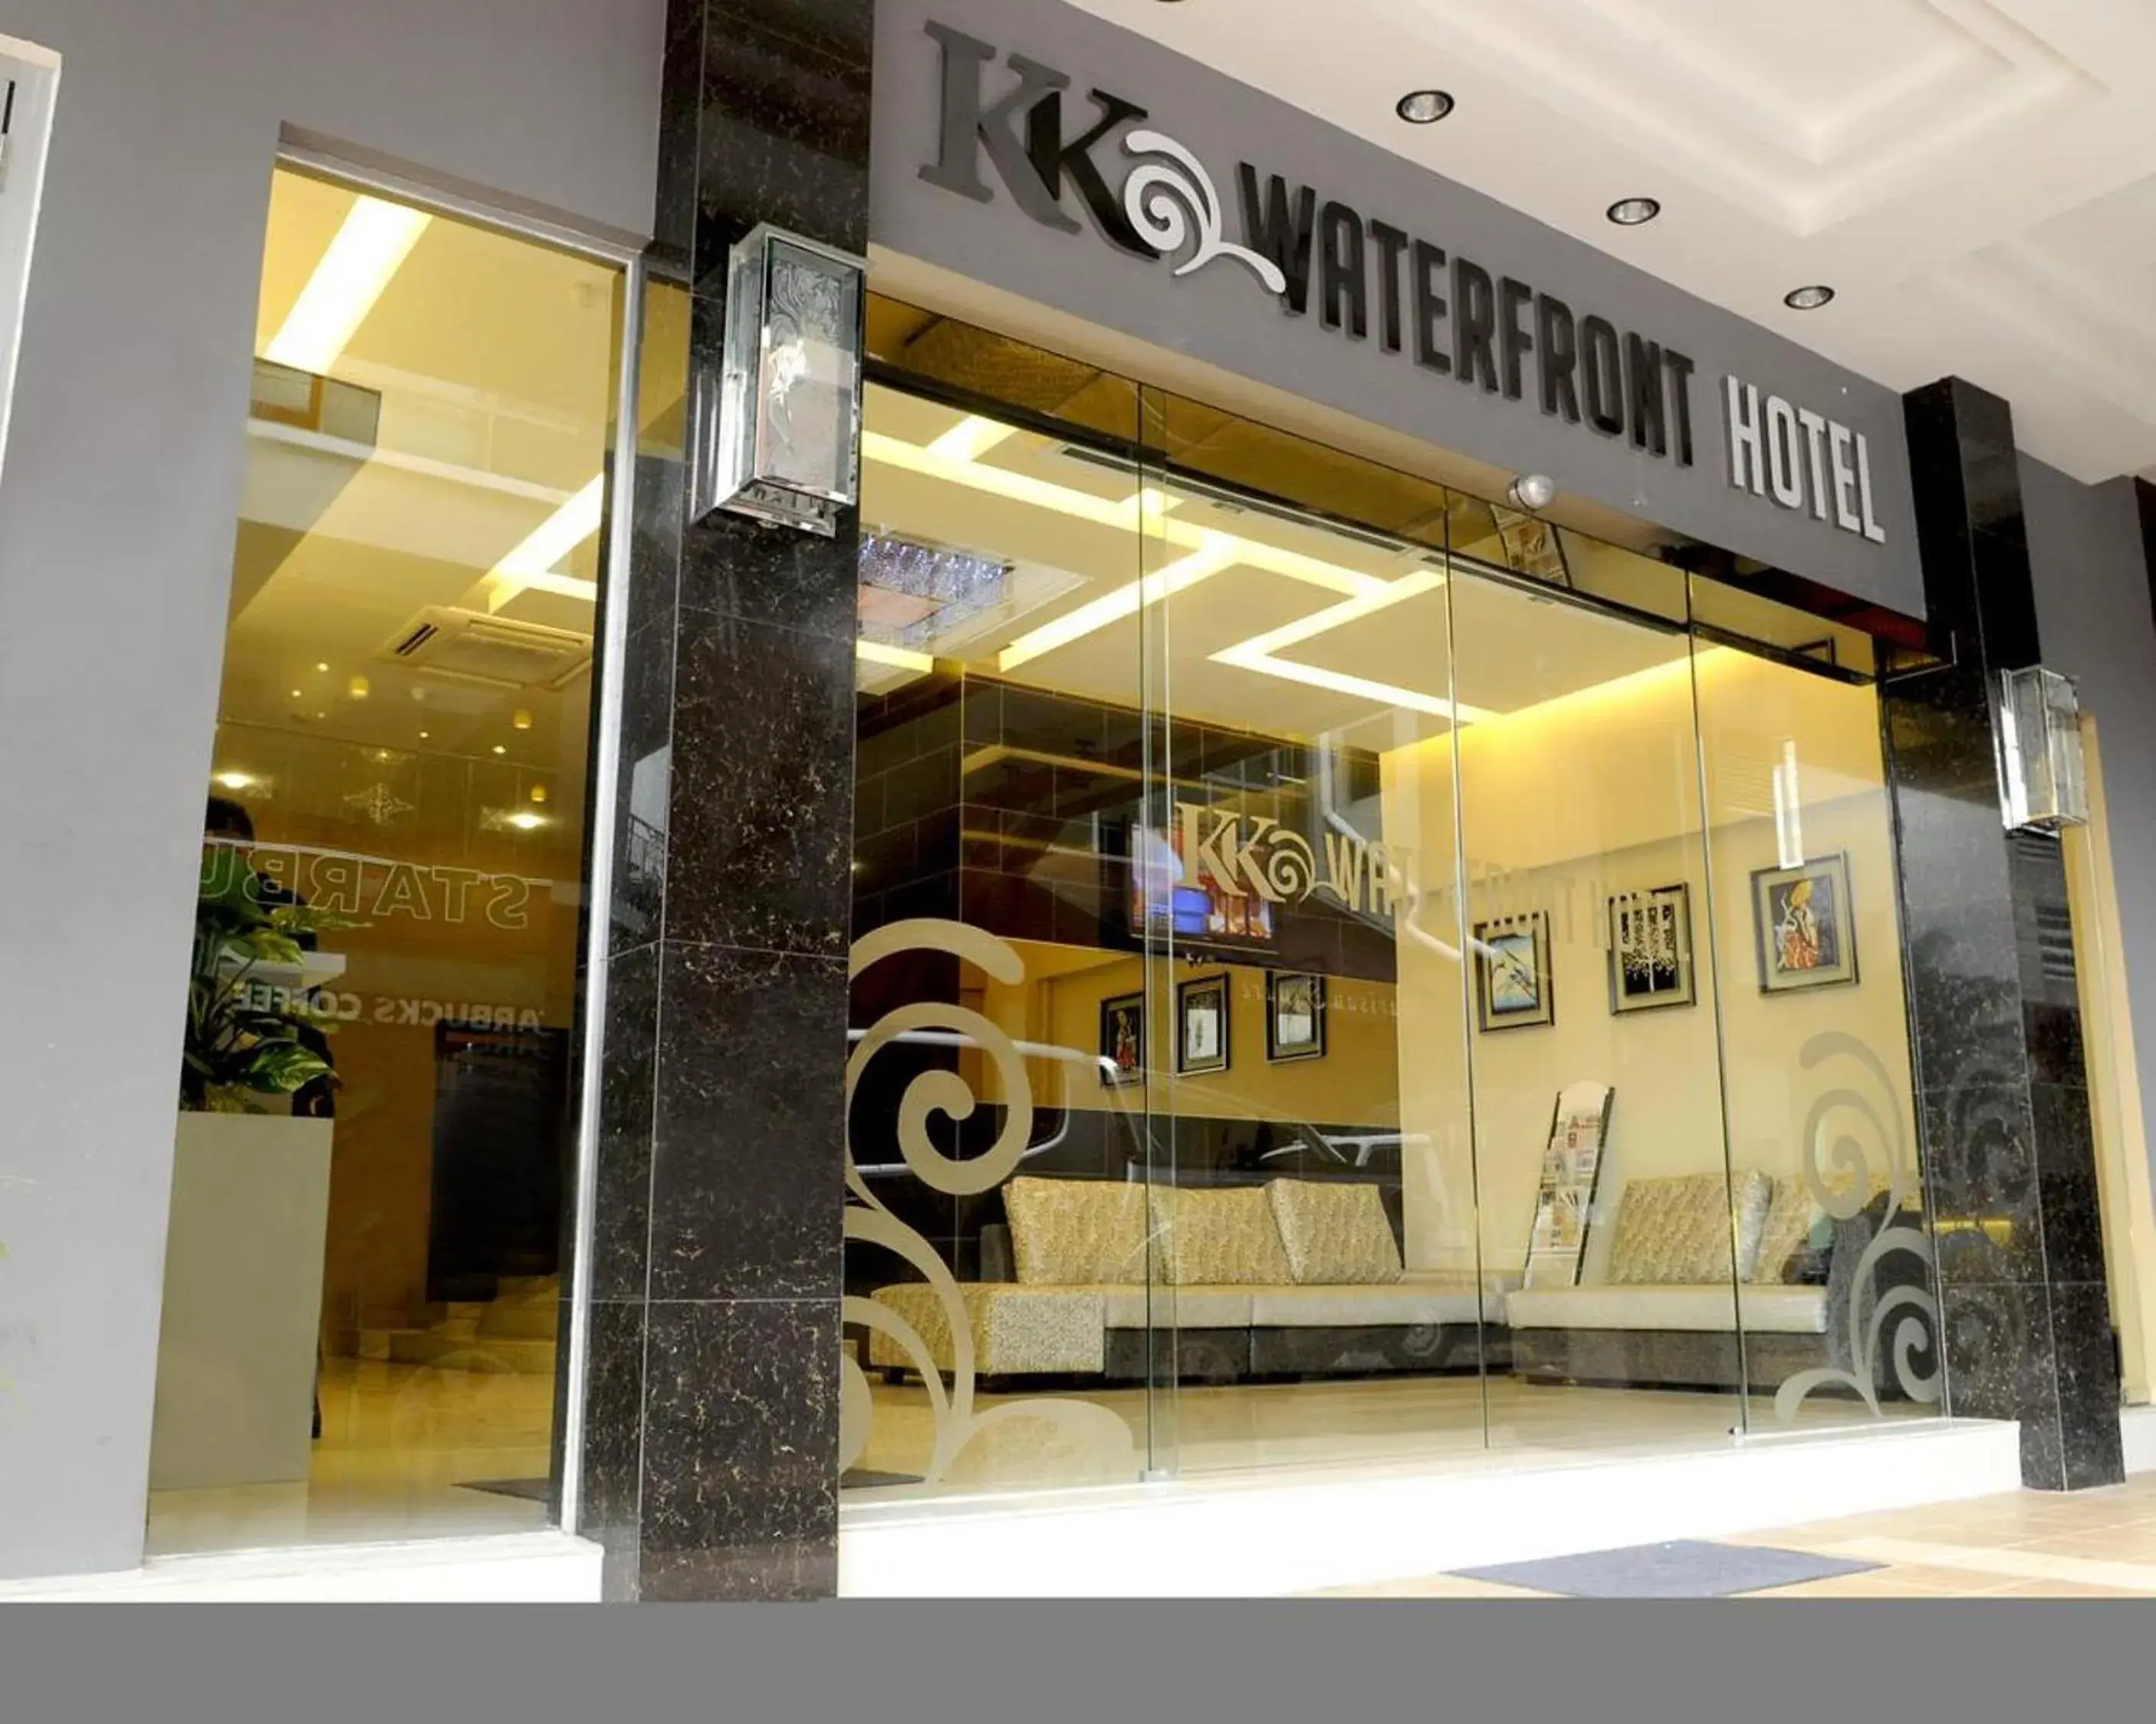 Facade/entrance in Kk Waterfront Hotel